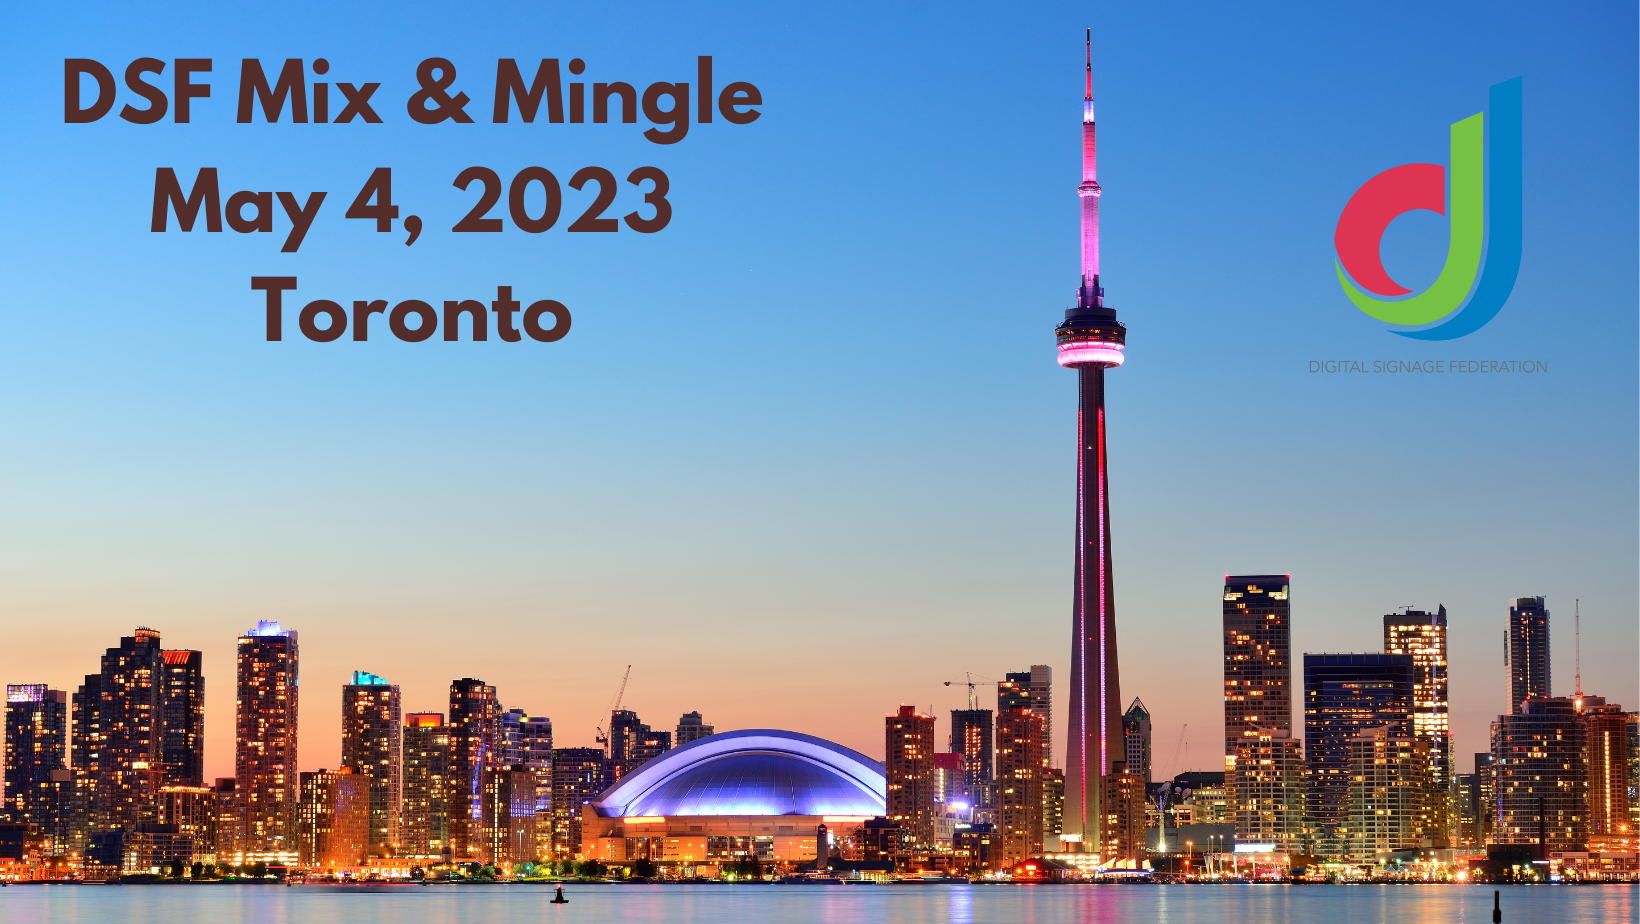 DSF Mix & Mingle May 4, 2023 Toronto